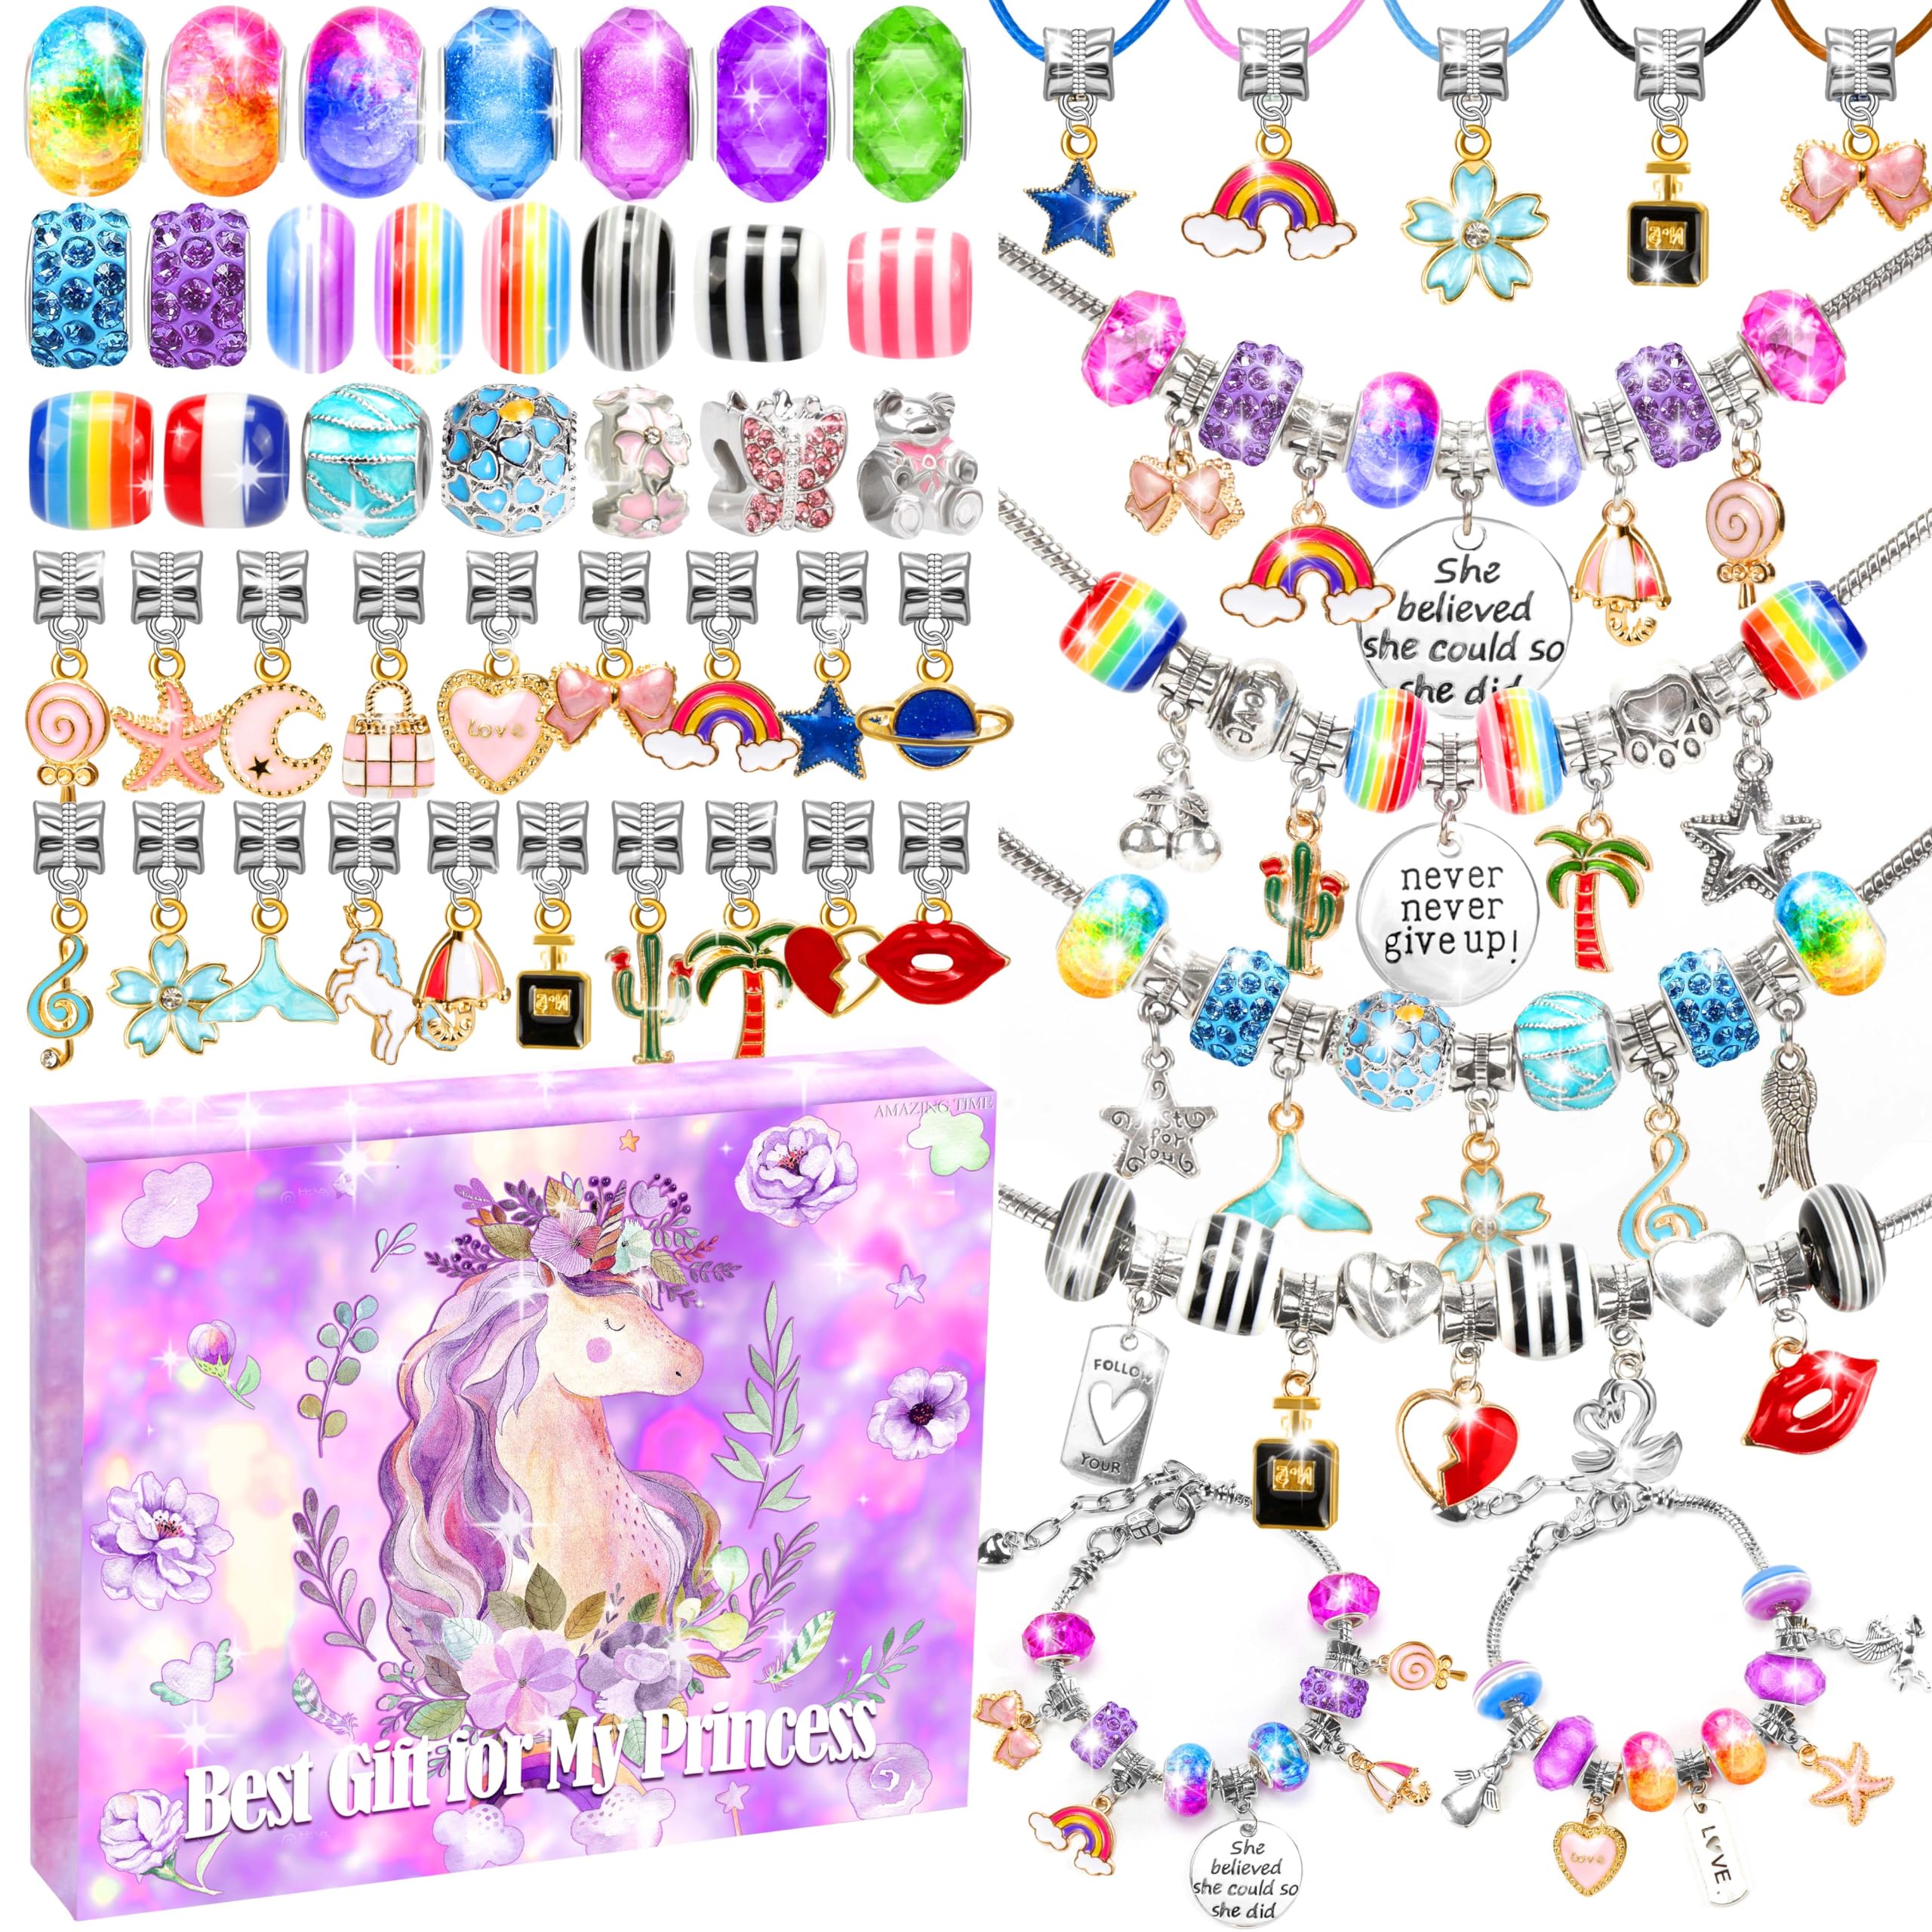 130 Pcs Charm Bracelet Making Kit ,Unicorn Mermaid Toy, Jewelry Beads for Girl Age 8-12, Creativity and Imagination Craft Set for 5 6 7 8 9 10 11 12 Year Old Teenage Birthday, Christmas Stocking Gift